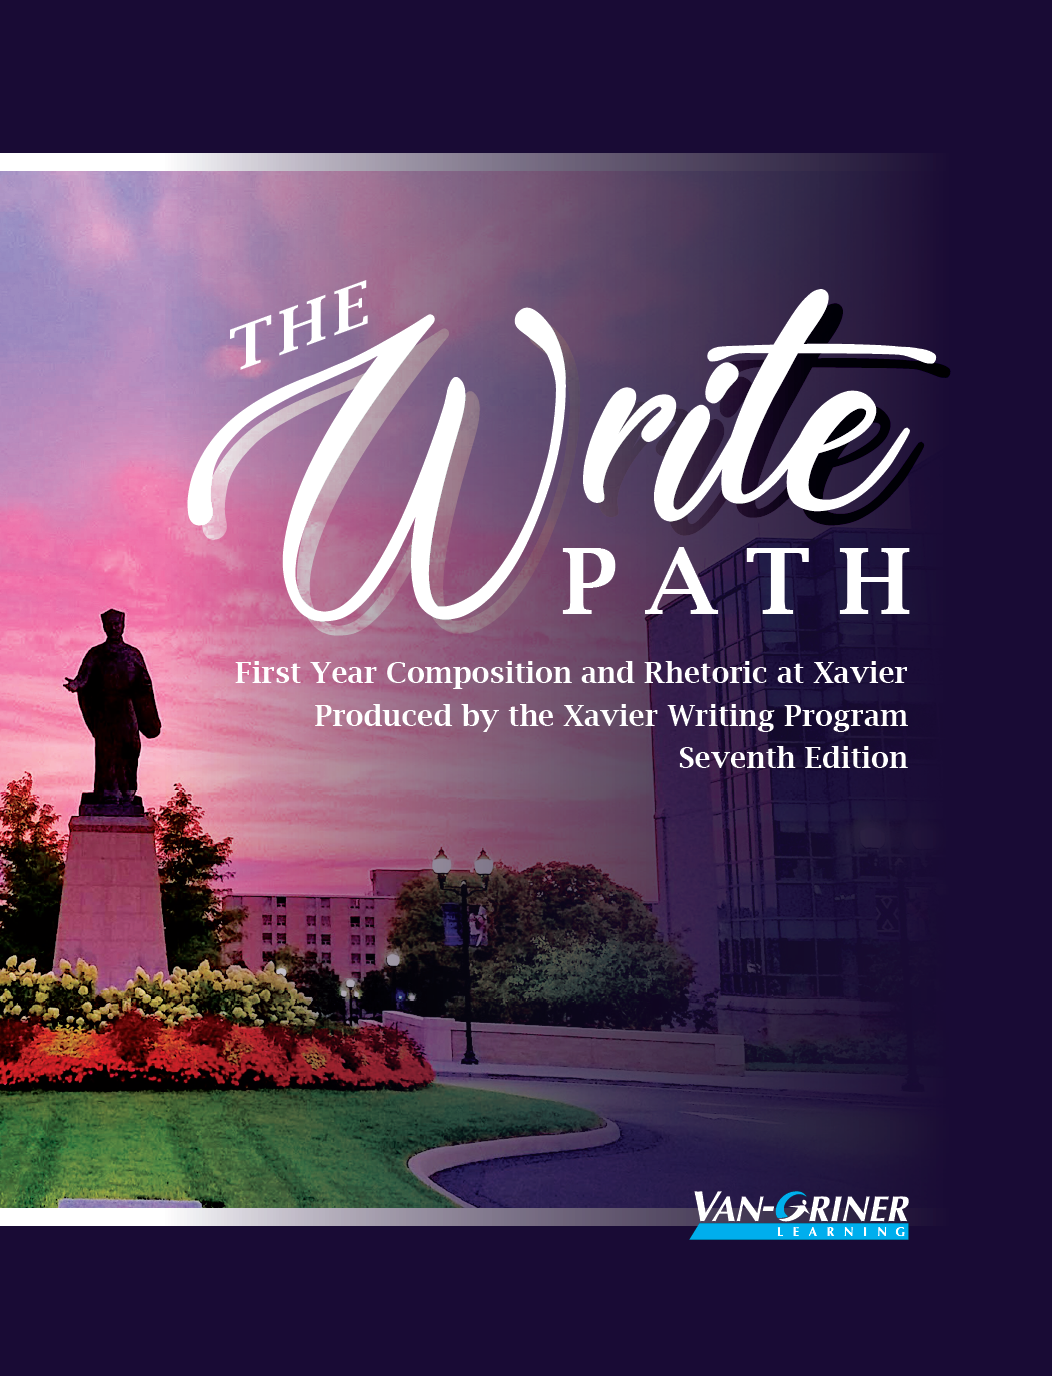 The Write Path